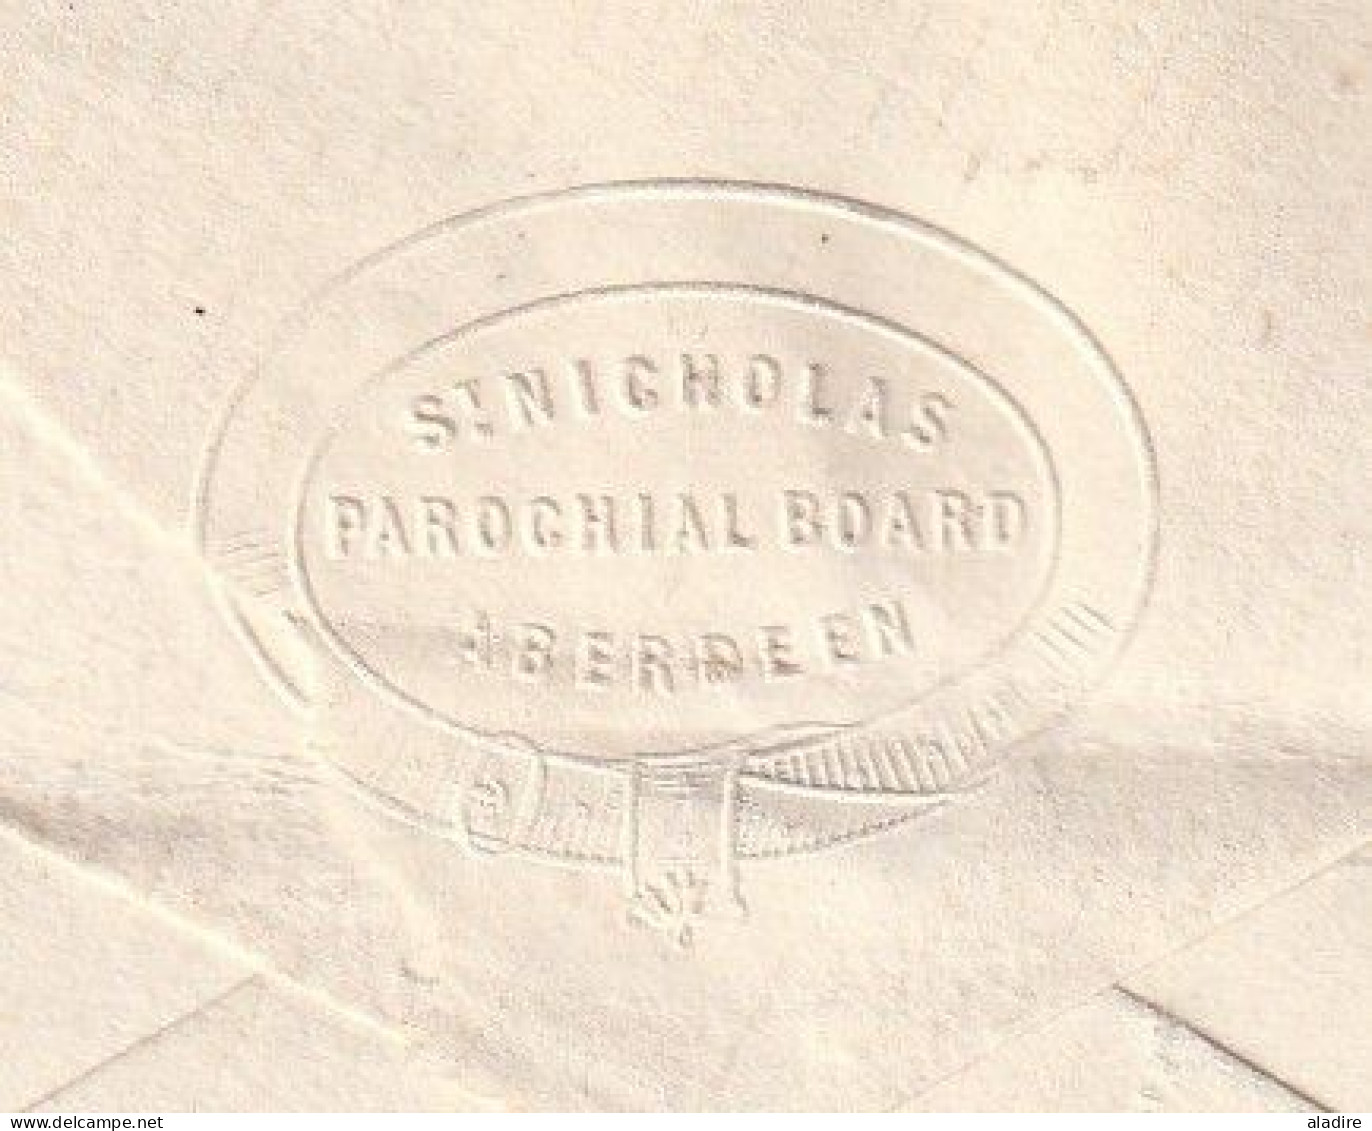 1884 - QV - Enveloppe De ABERDEEN Vers The Inspector Of Poor, PETERHEAD , Scotland, Ecosse - 1 D Stamp - Arrival Stamp - Postmark Collection